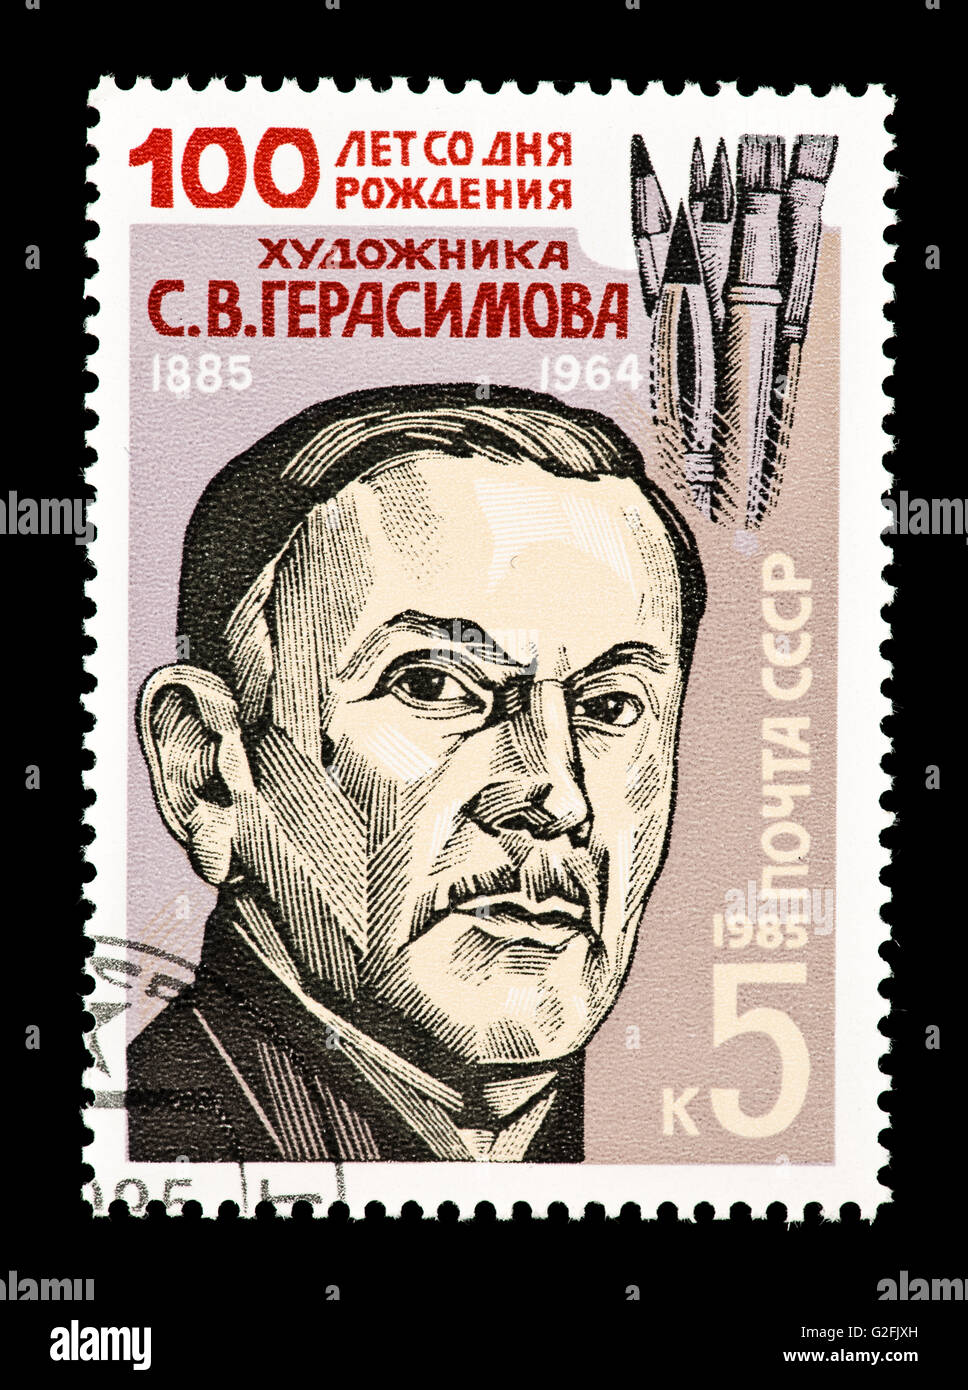 Sello de la Unión Soviética representando Vasilievich Sergei Gerasimov, pintor. Foto de stock